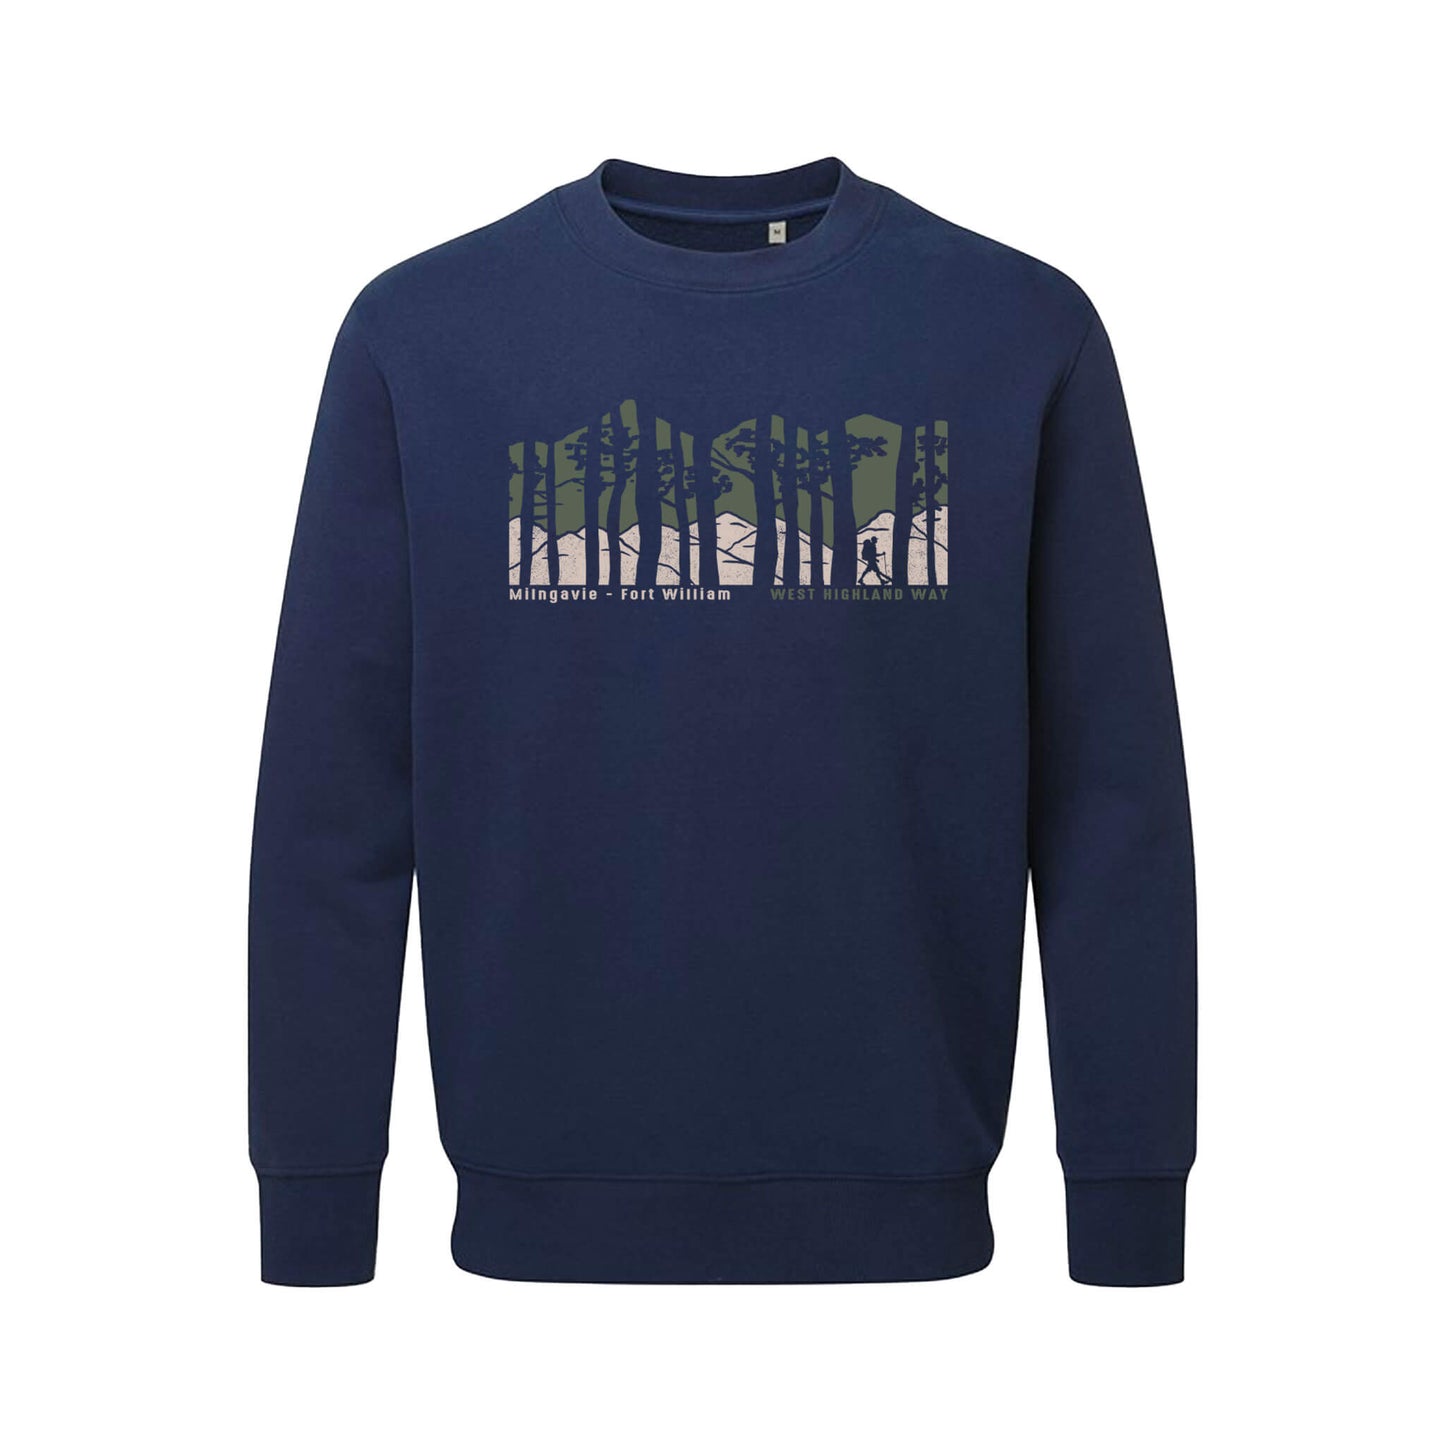 Forest Organic Cotton Sweater | Navy | West Highland Way